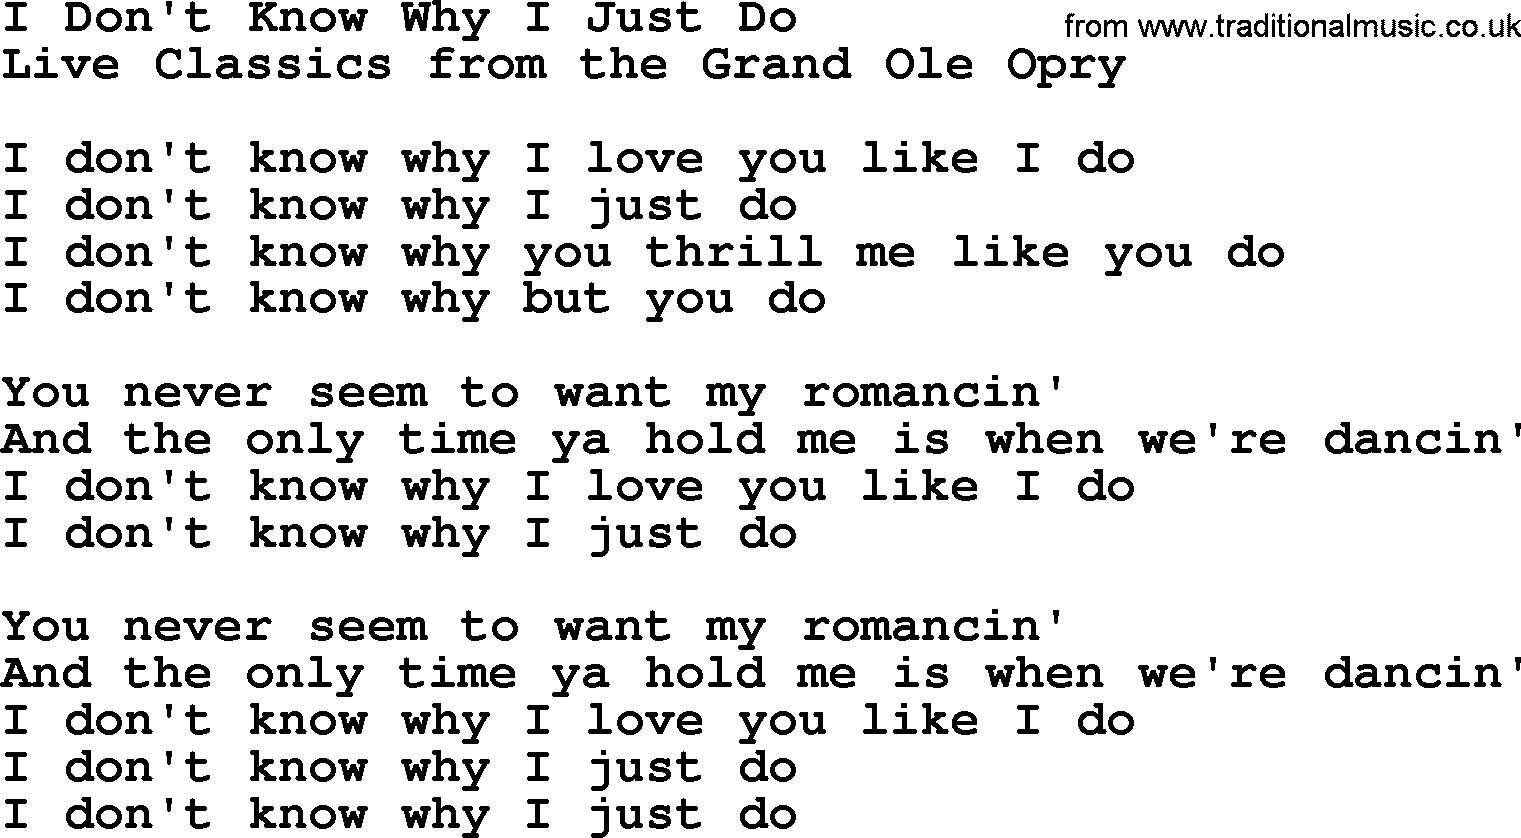 Marty Robbins song: I Don't Know Why I Just Do, lyrics